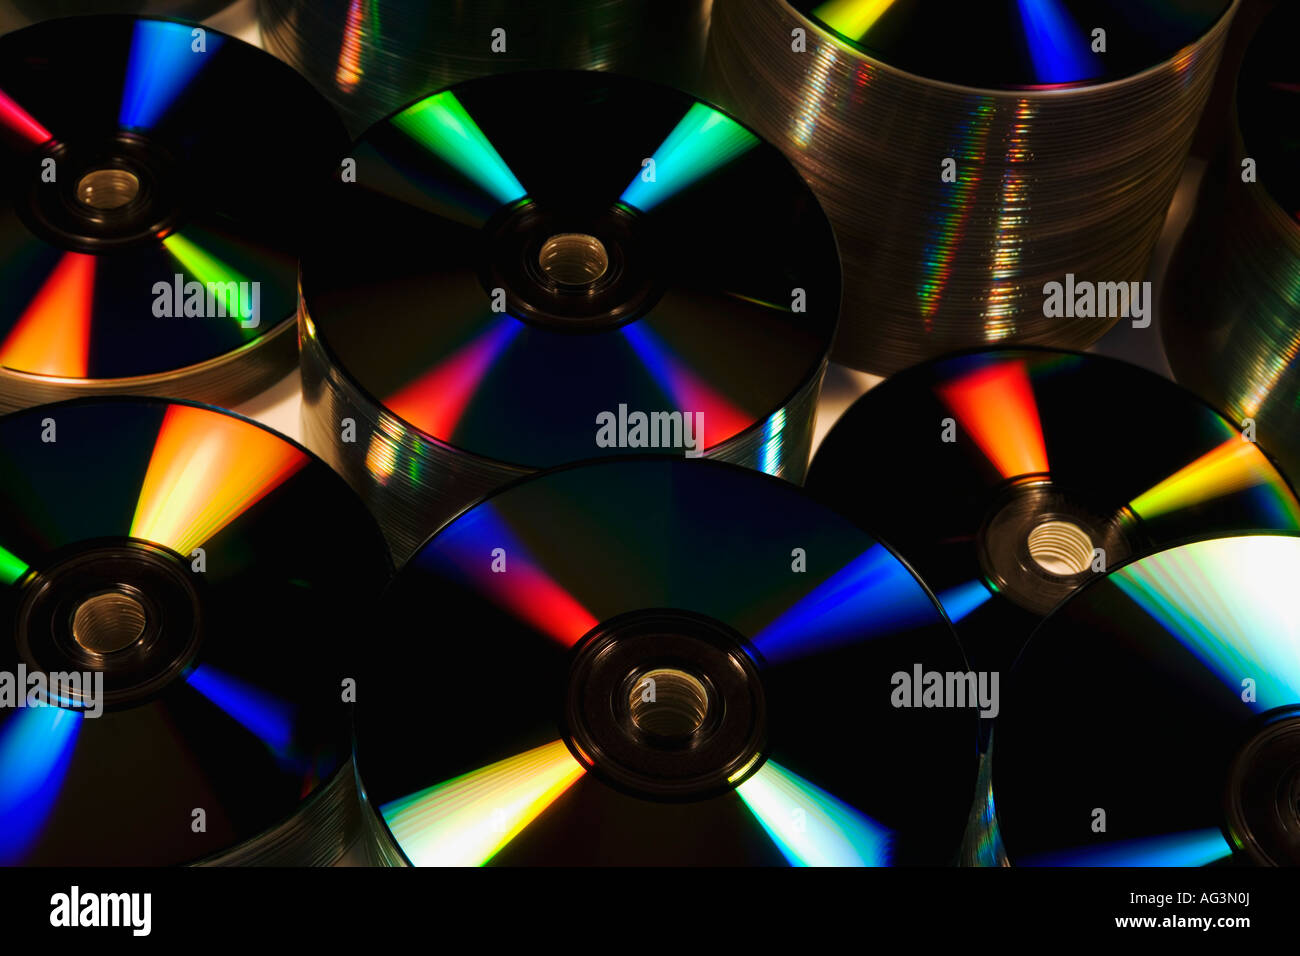 Stacks of compact discs Stock Photo